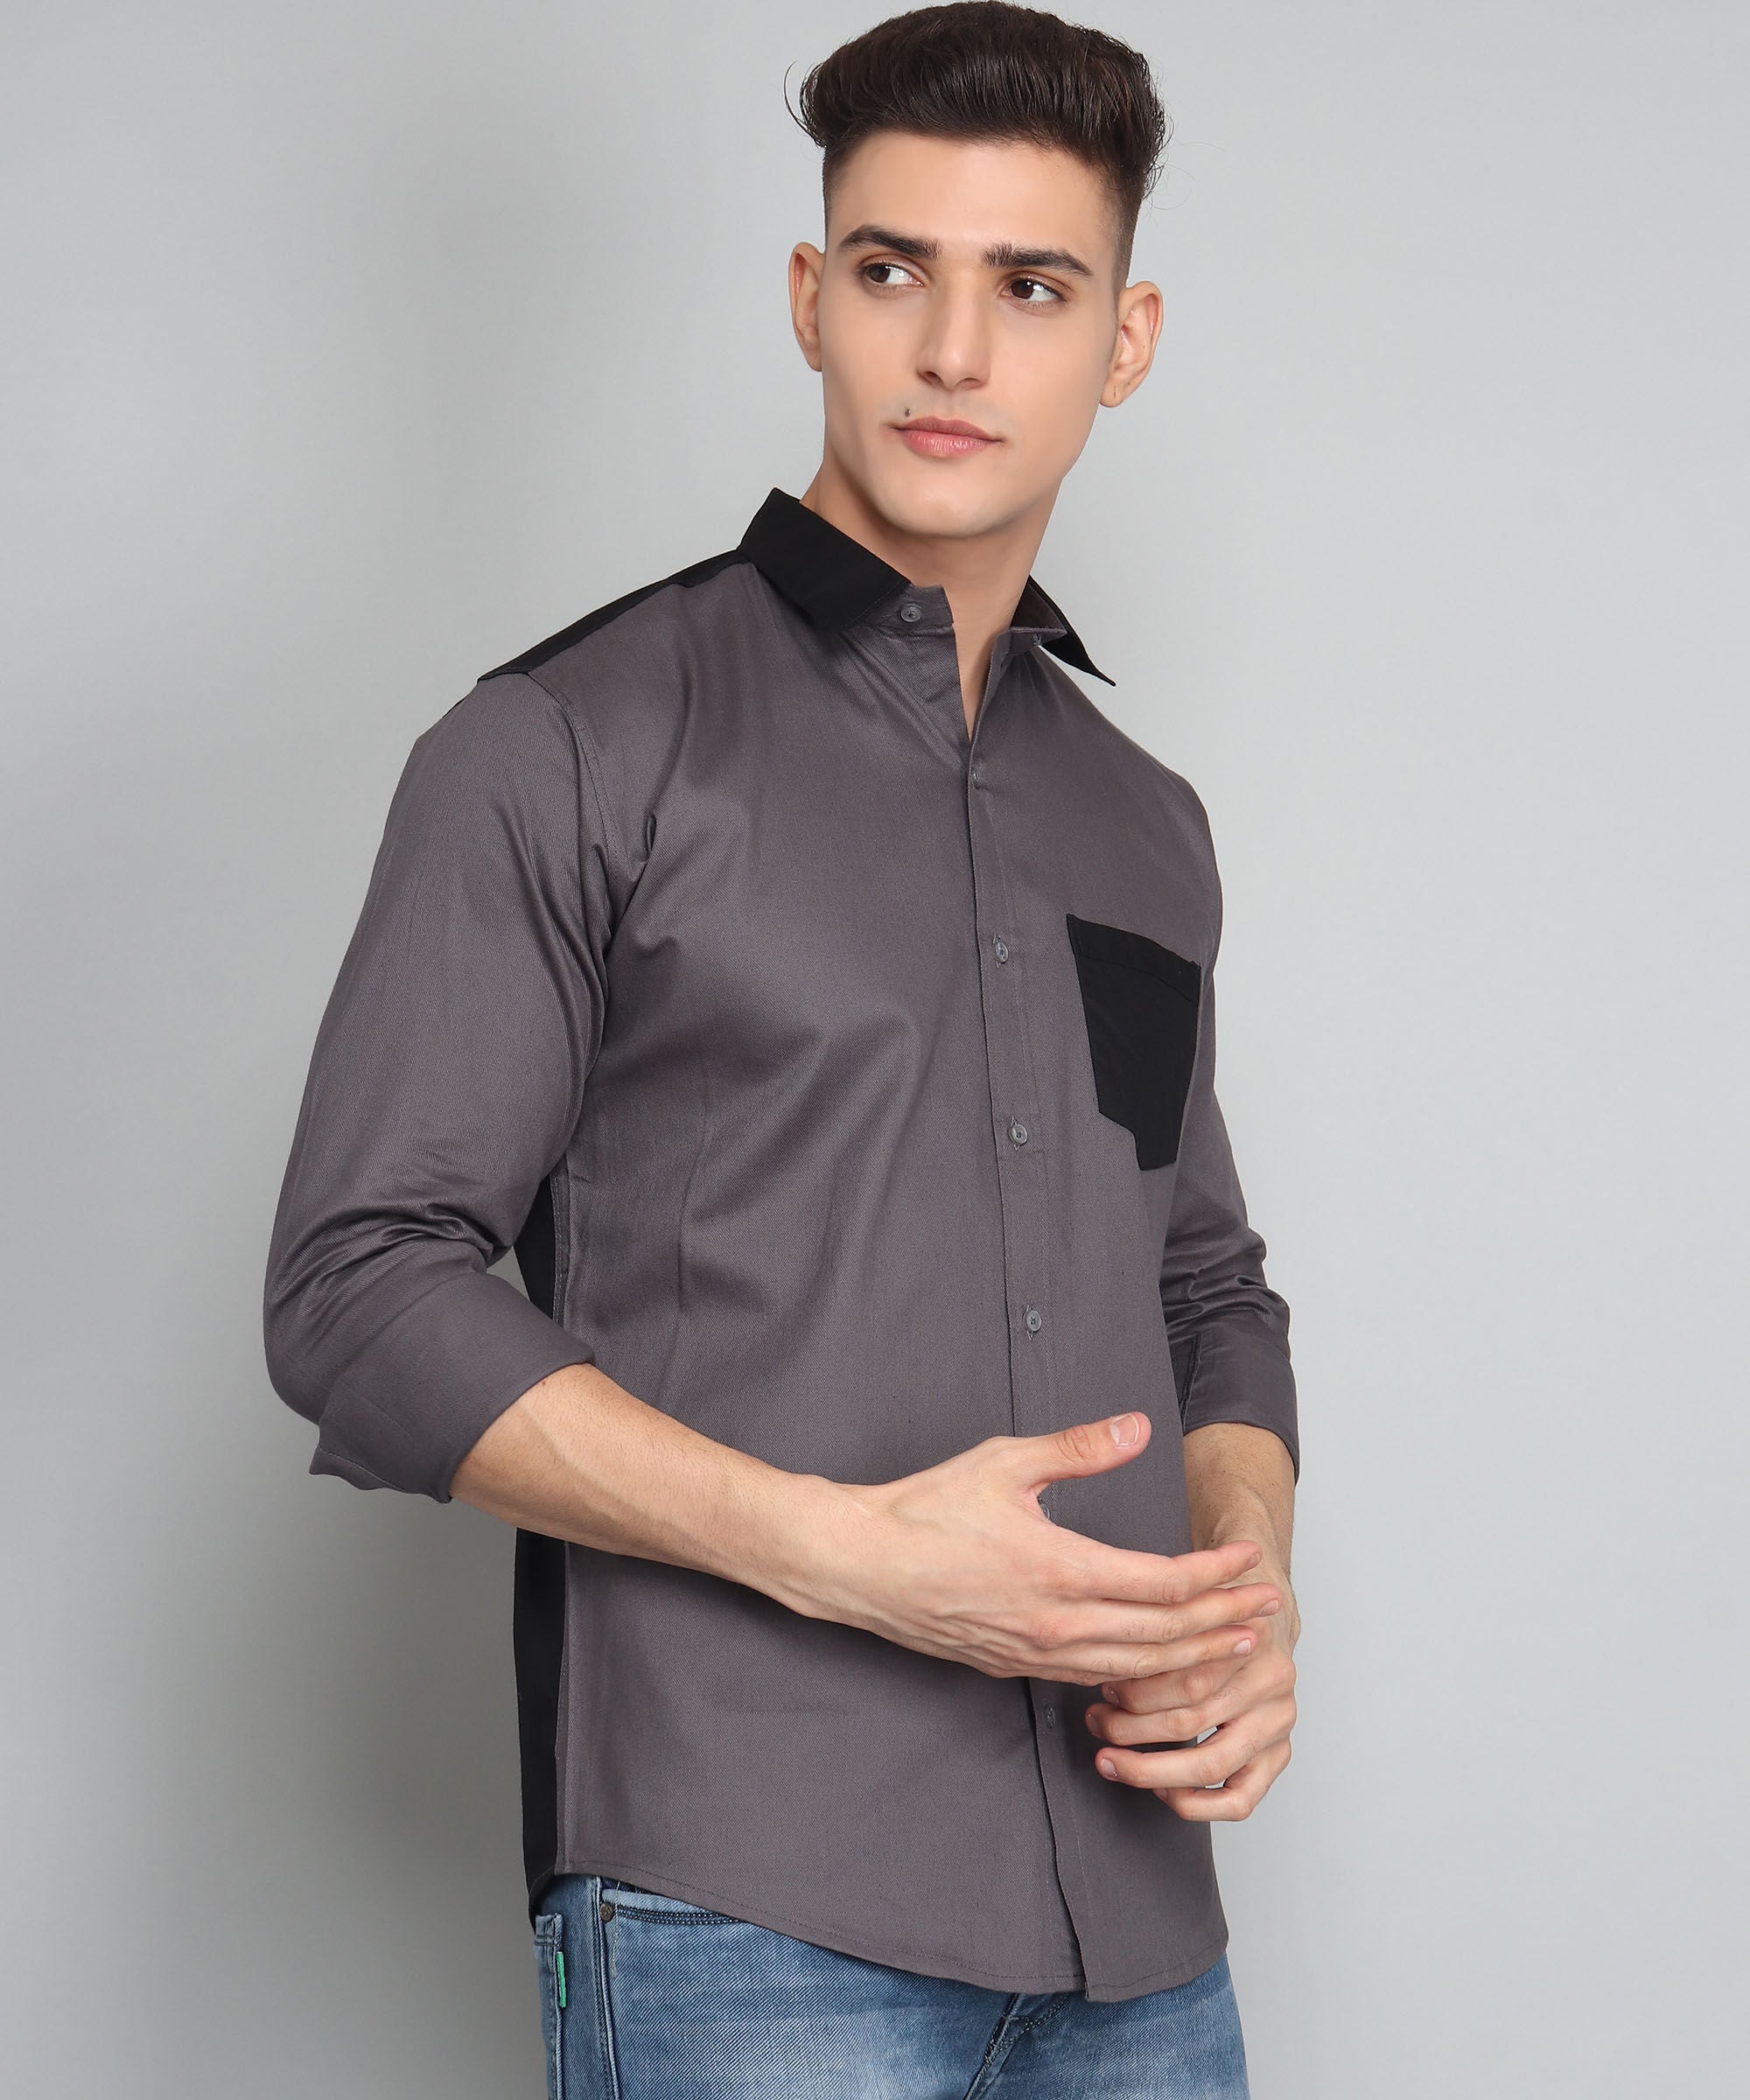 Creek Premium Grey Solid  Cotton Dress Shirt For Men